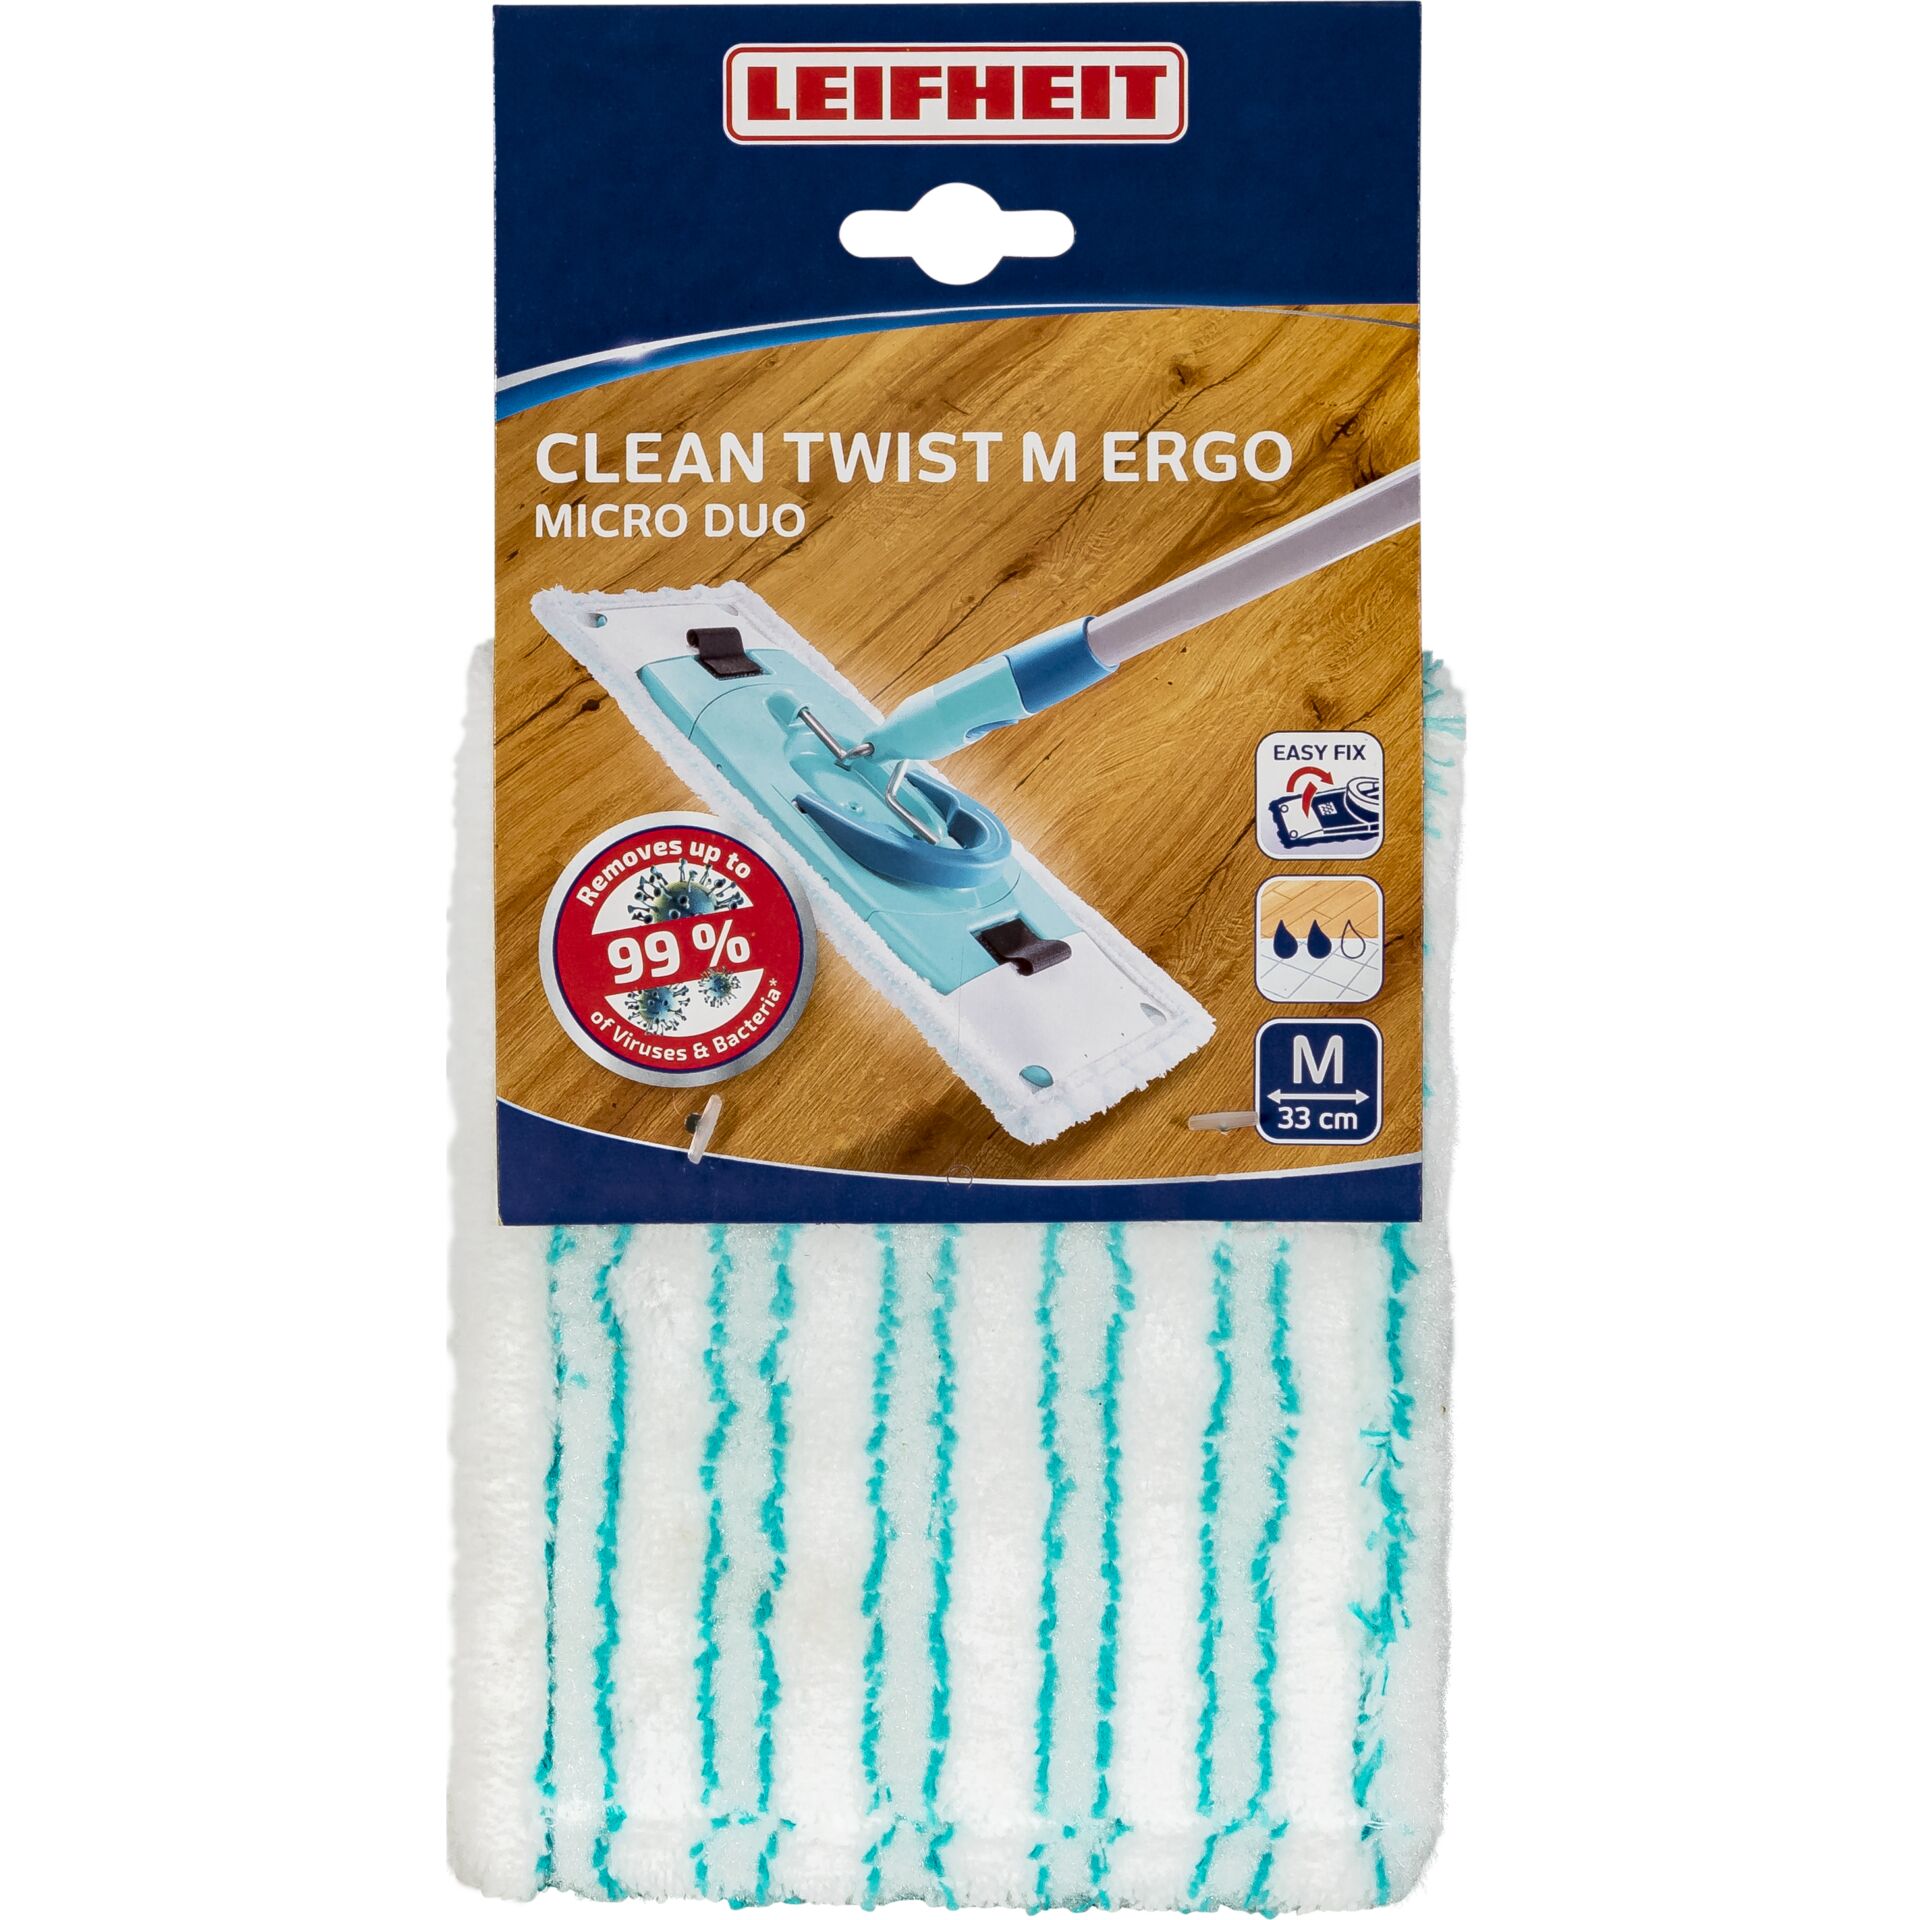 Leifheit Wiper Cover Clean Twist M Ergo micro duo